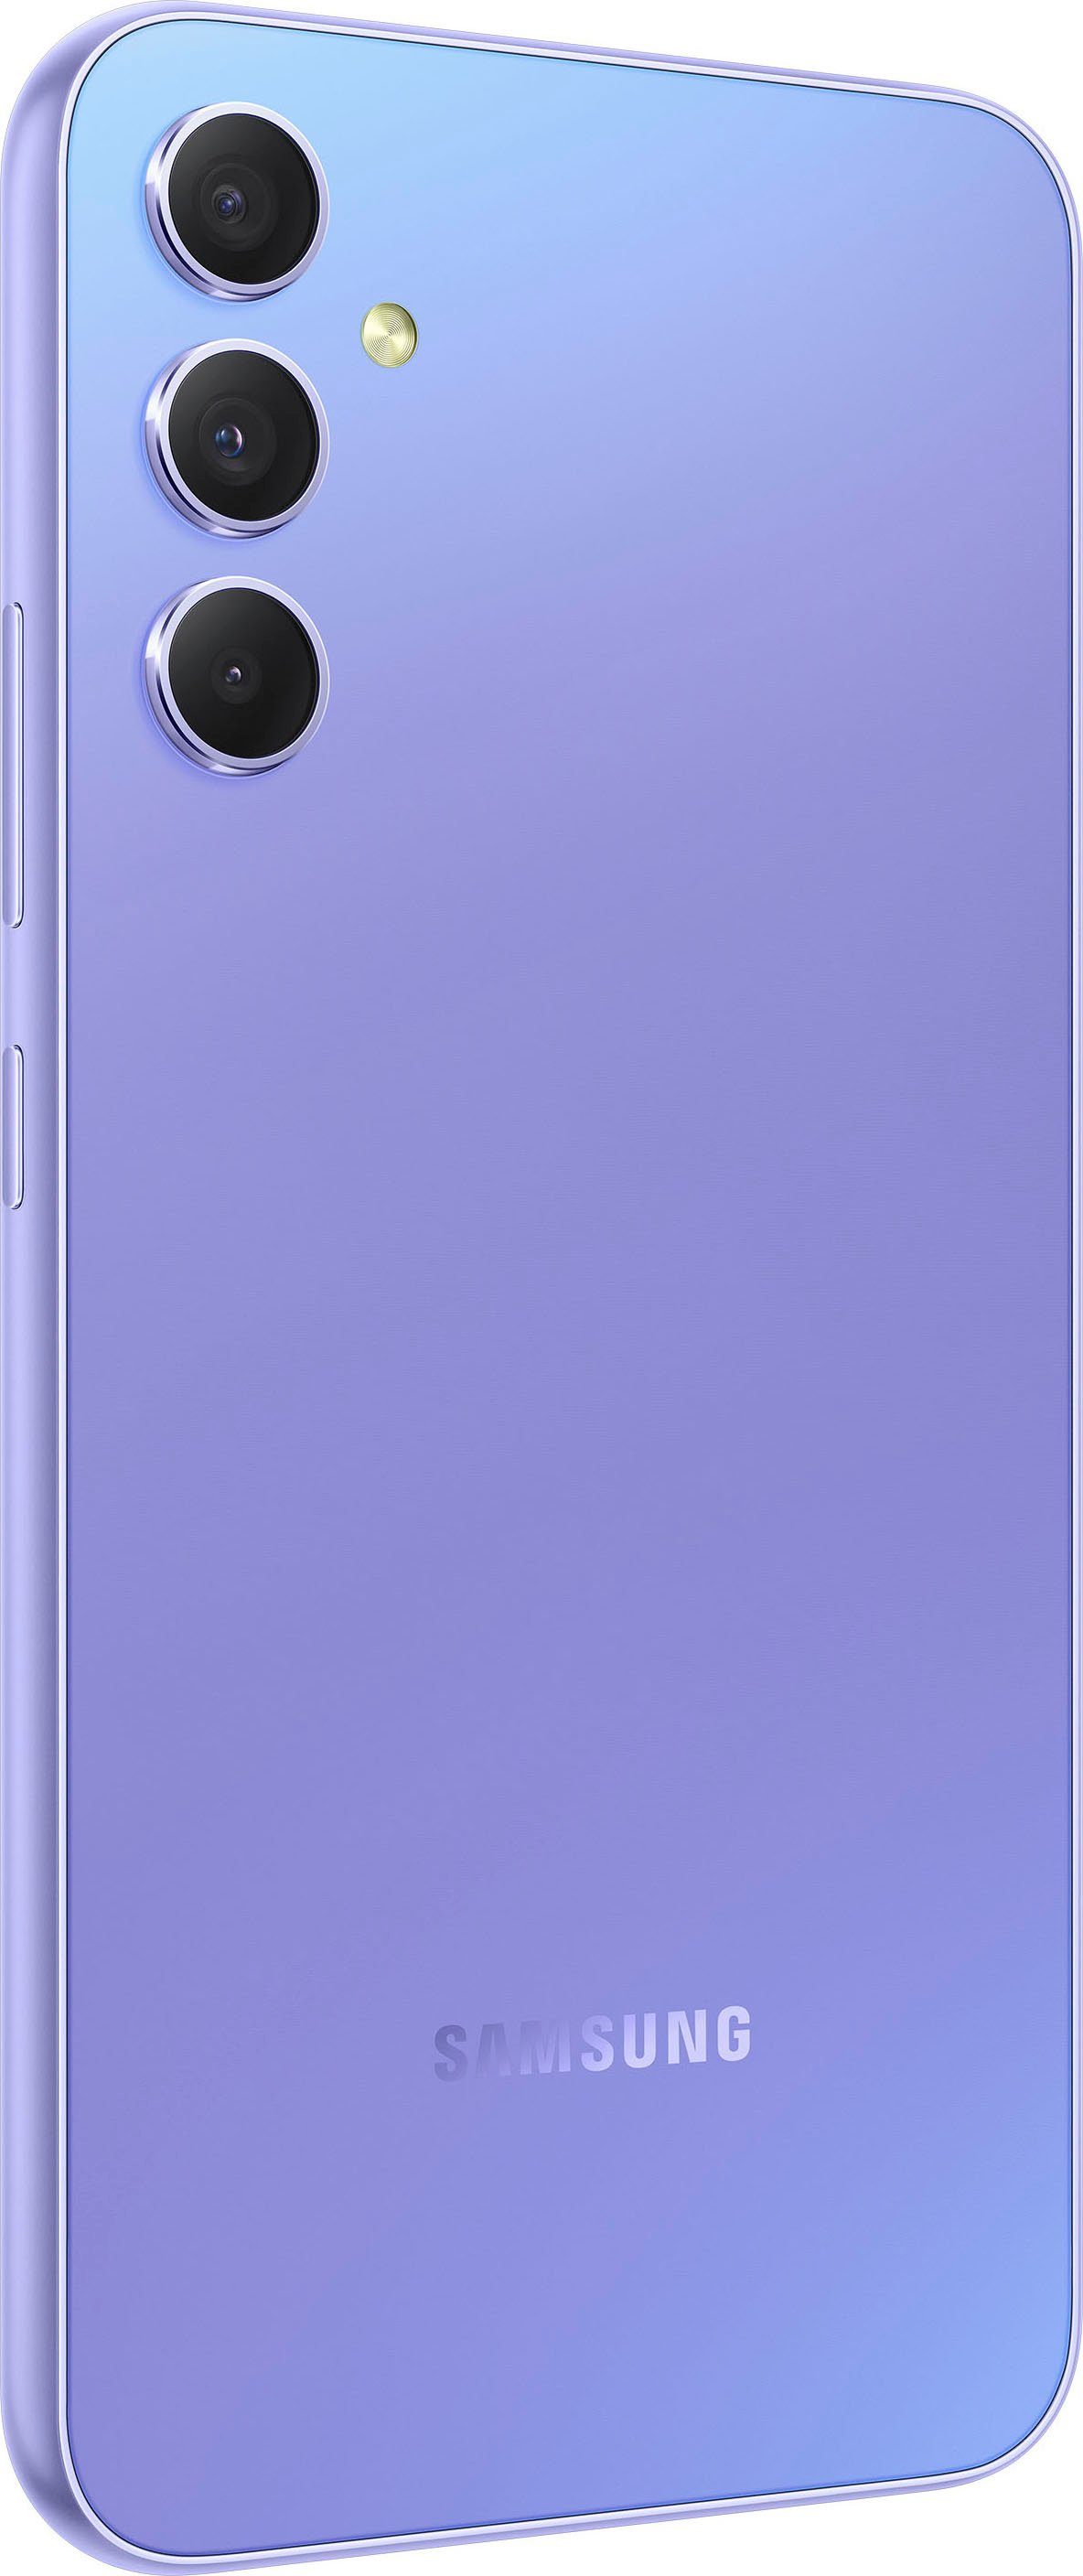 GB Speicherplatz, Kamera) A34 256 Galaxy 48 5G MP Samsung Zoll, Smartphone cm/6,6 leicht violett (16,65 256GB